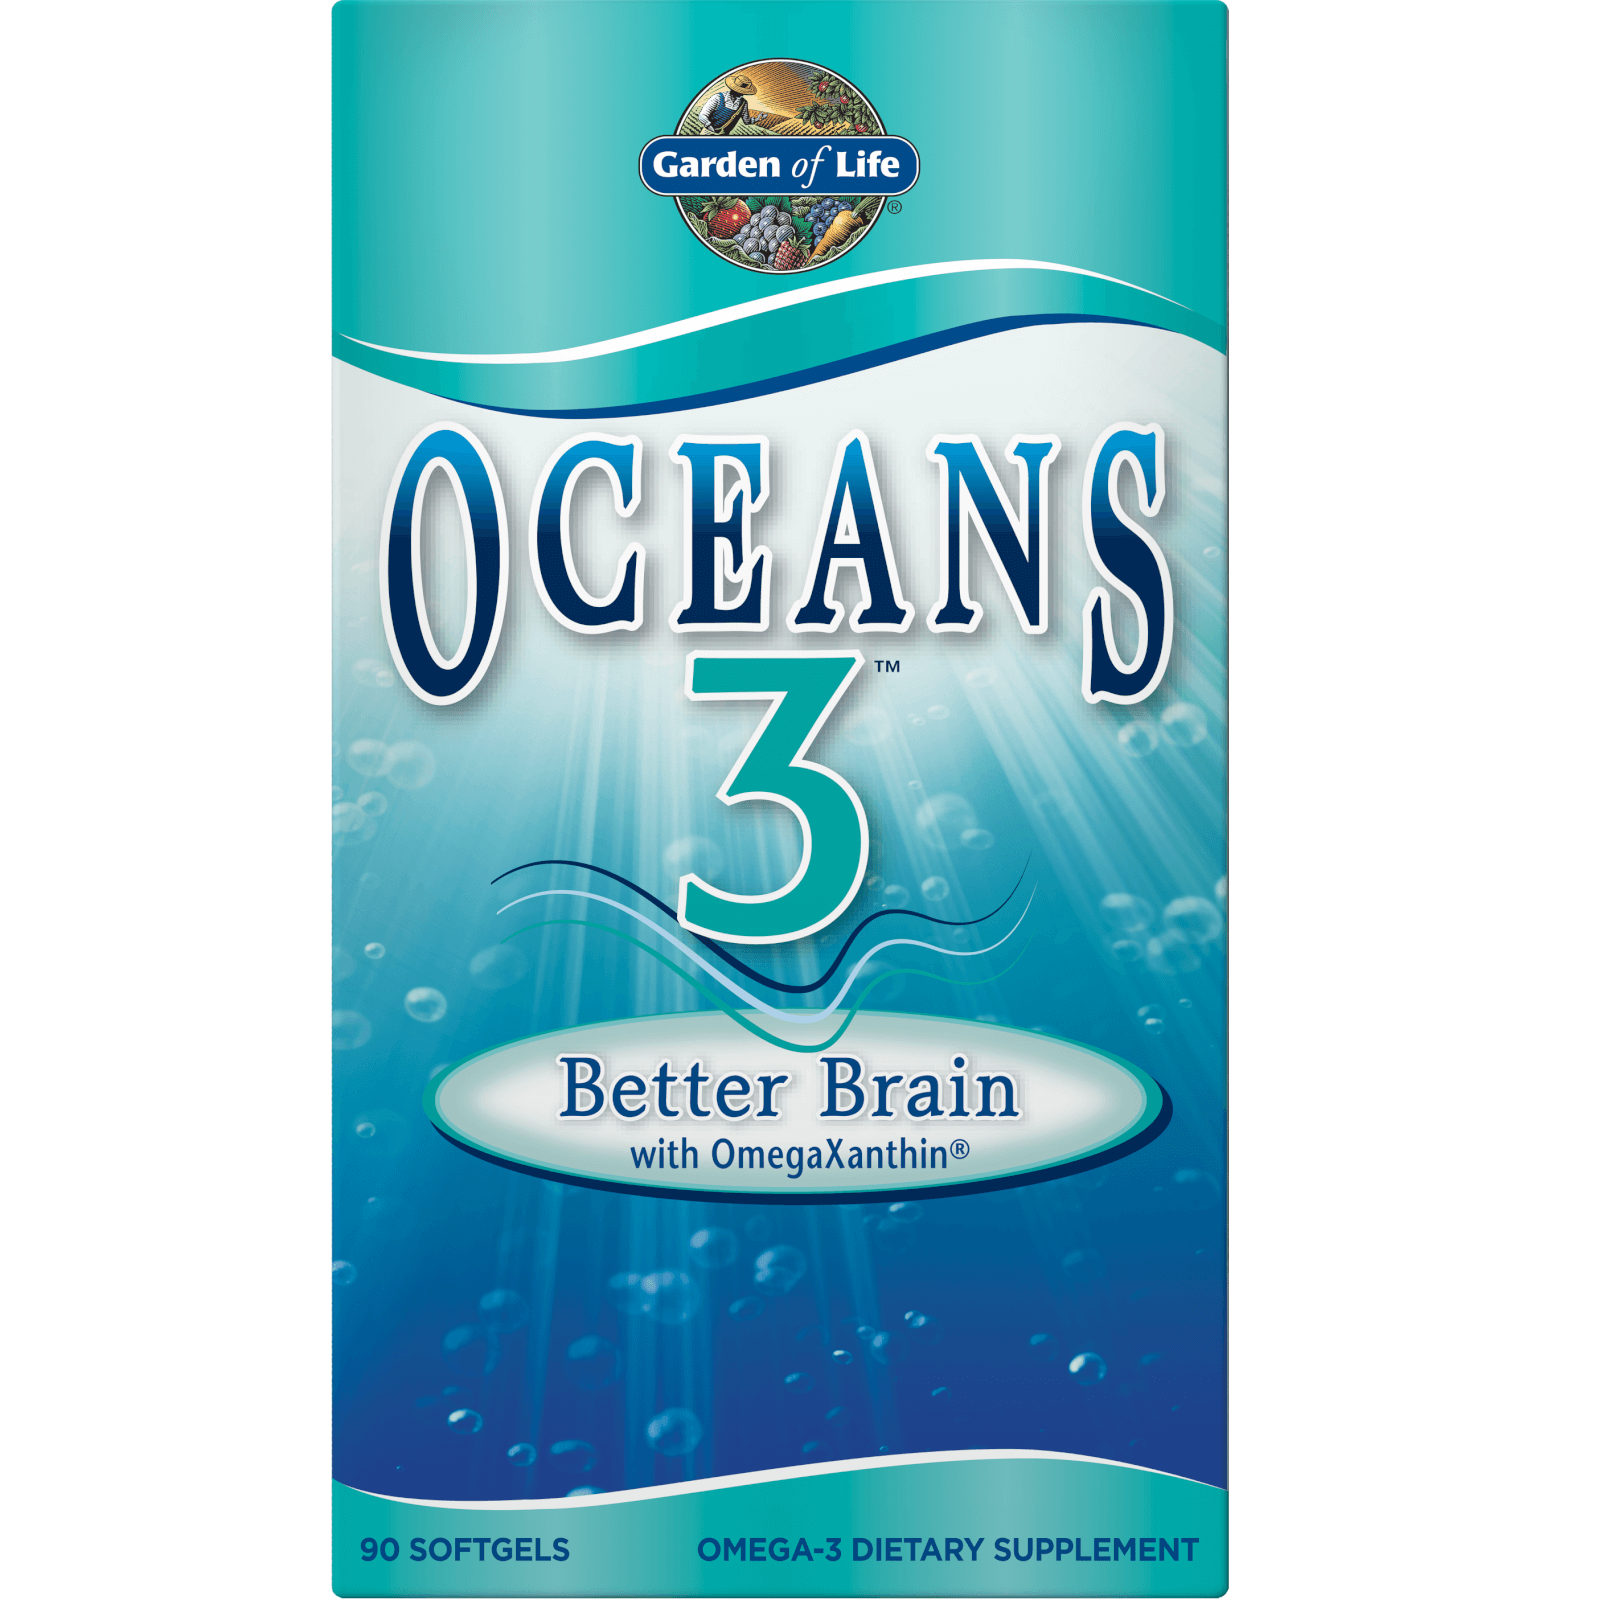 Oceans 3 Better Brain 90ct softgels